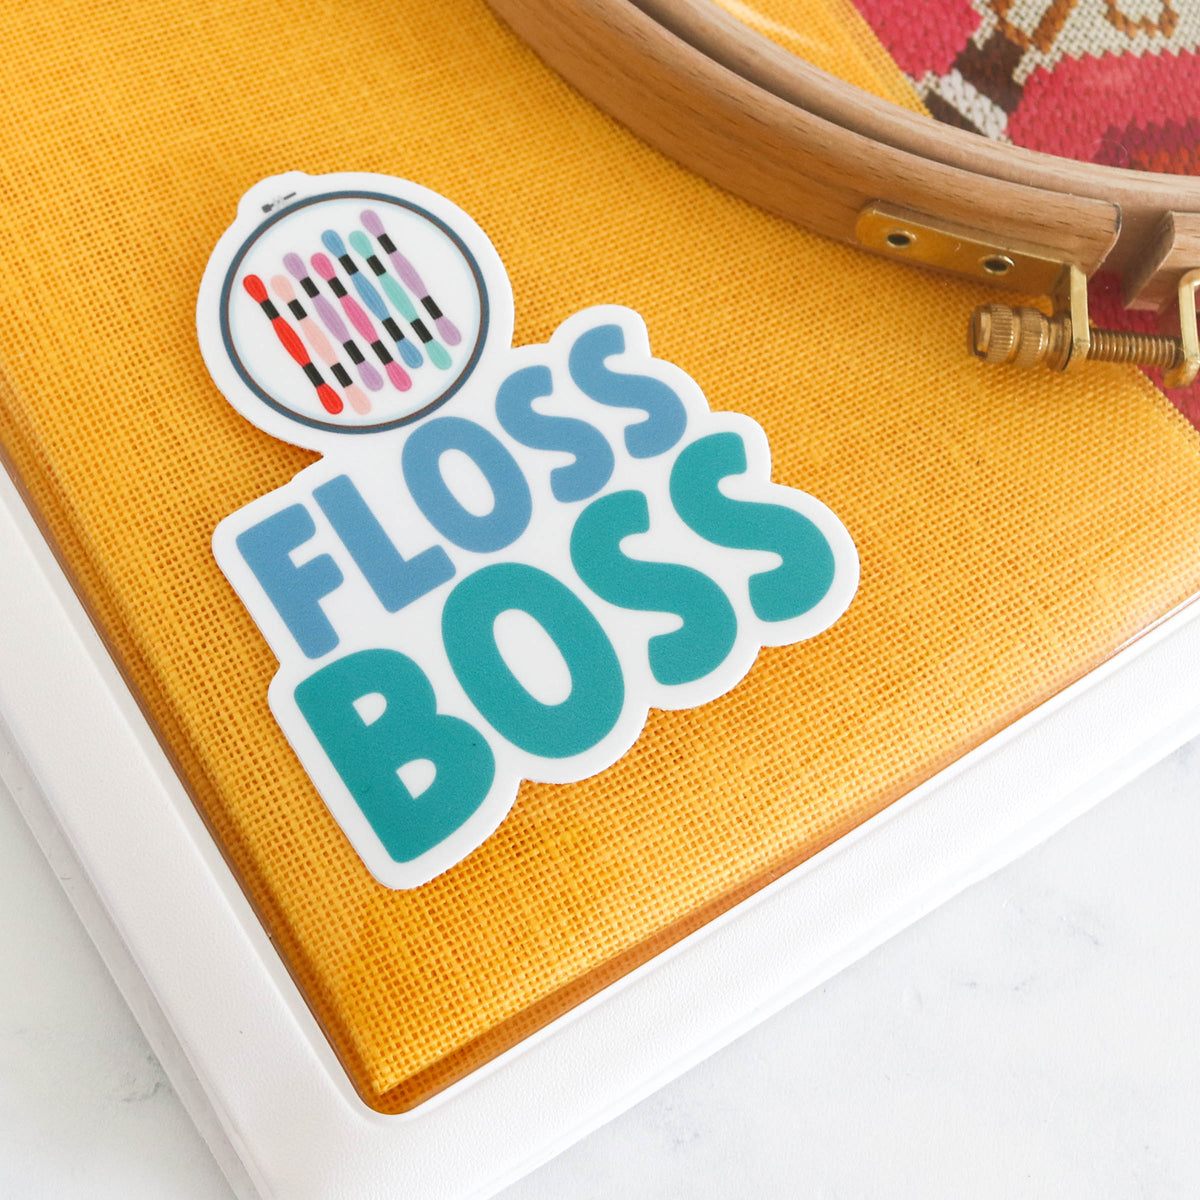 Stitchy Stickers - Floss Boss